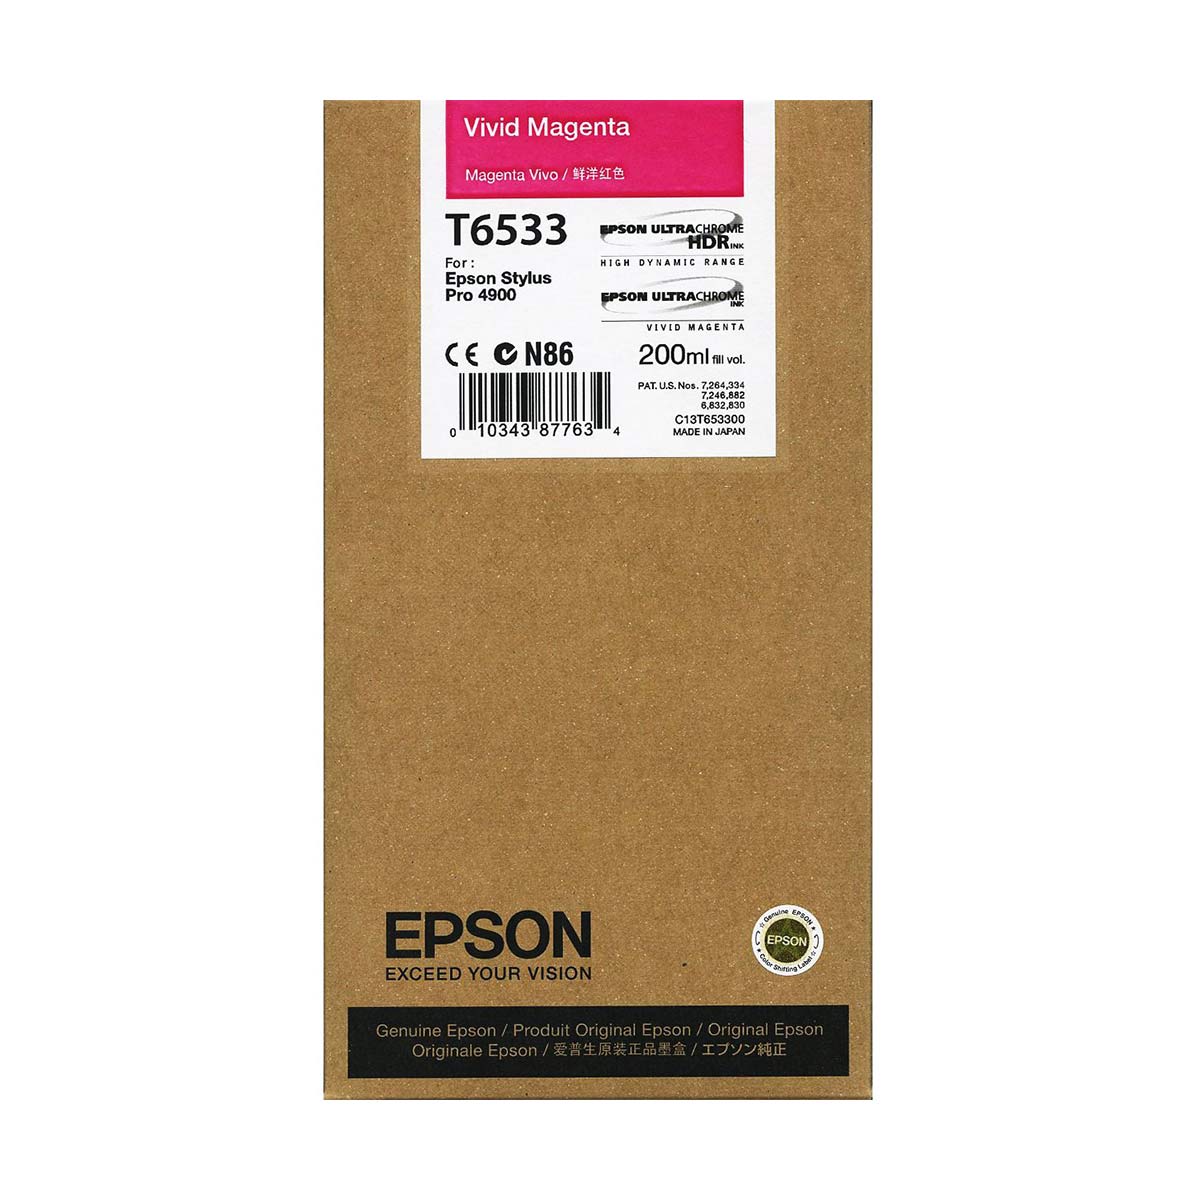 Epson T6533 4900 Ultrachrome Ink HDR 200ml Vivid Magenta